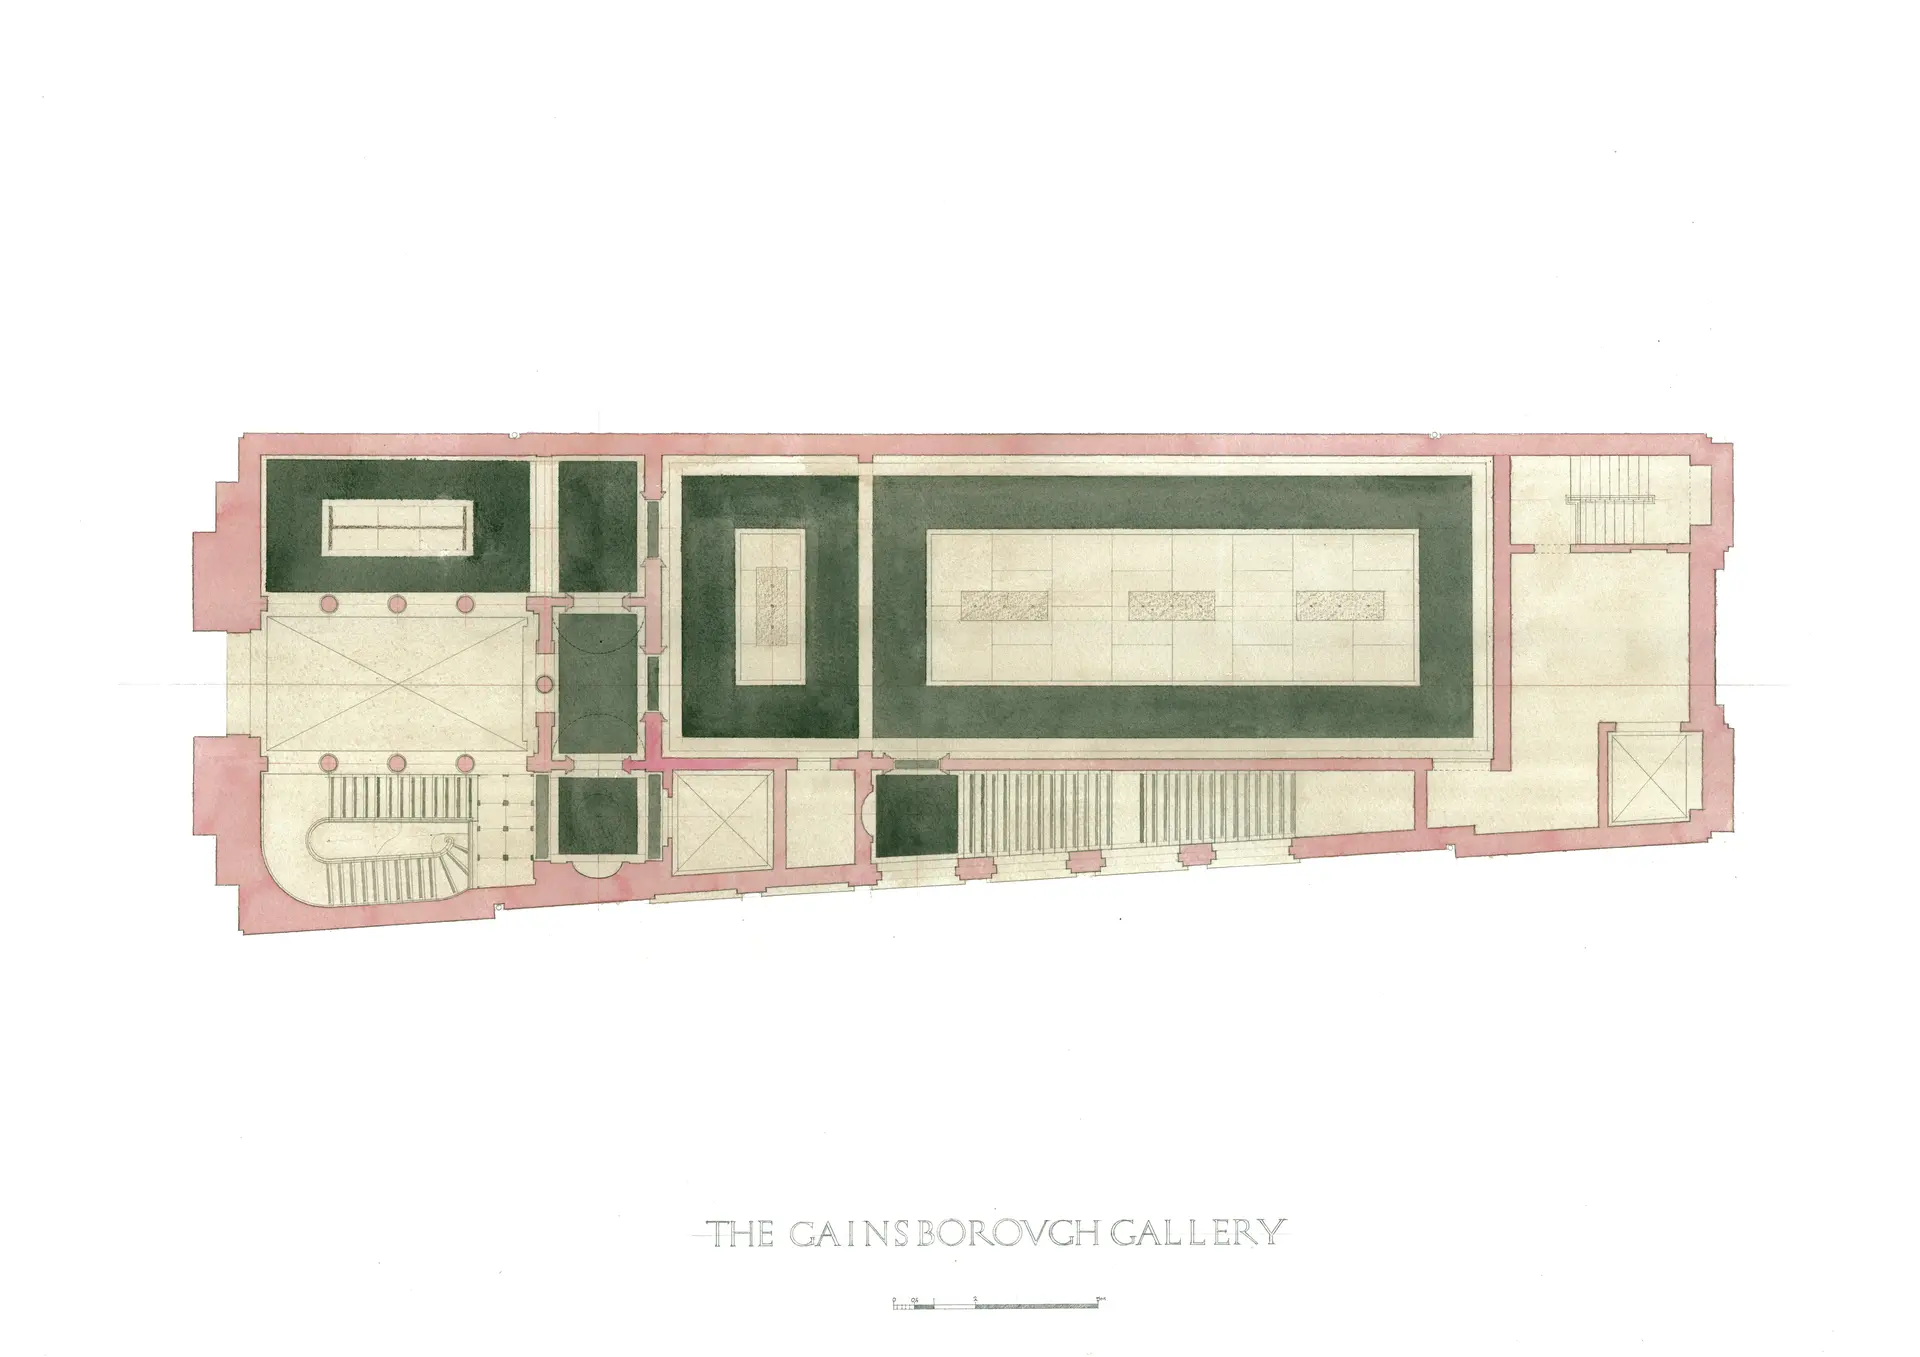 Gainsborough House gallery annexe, ground floor plan, Peter Folland 2016